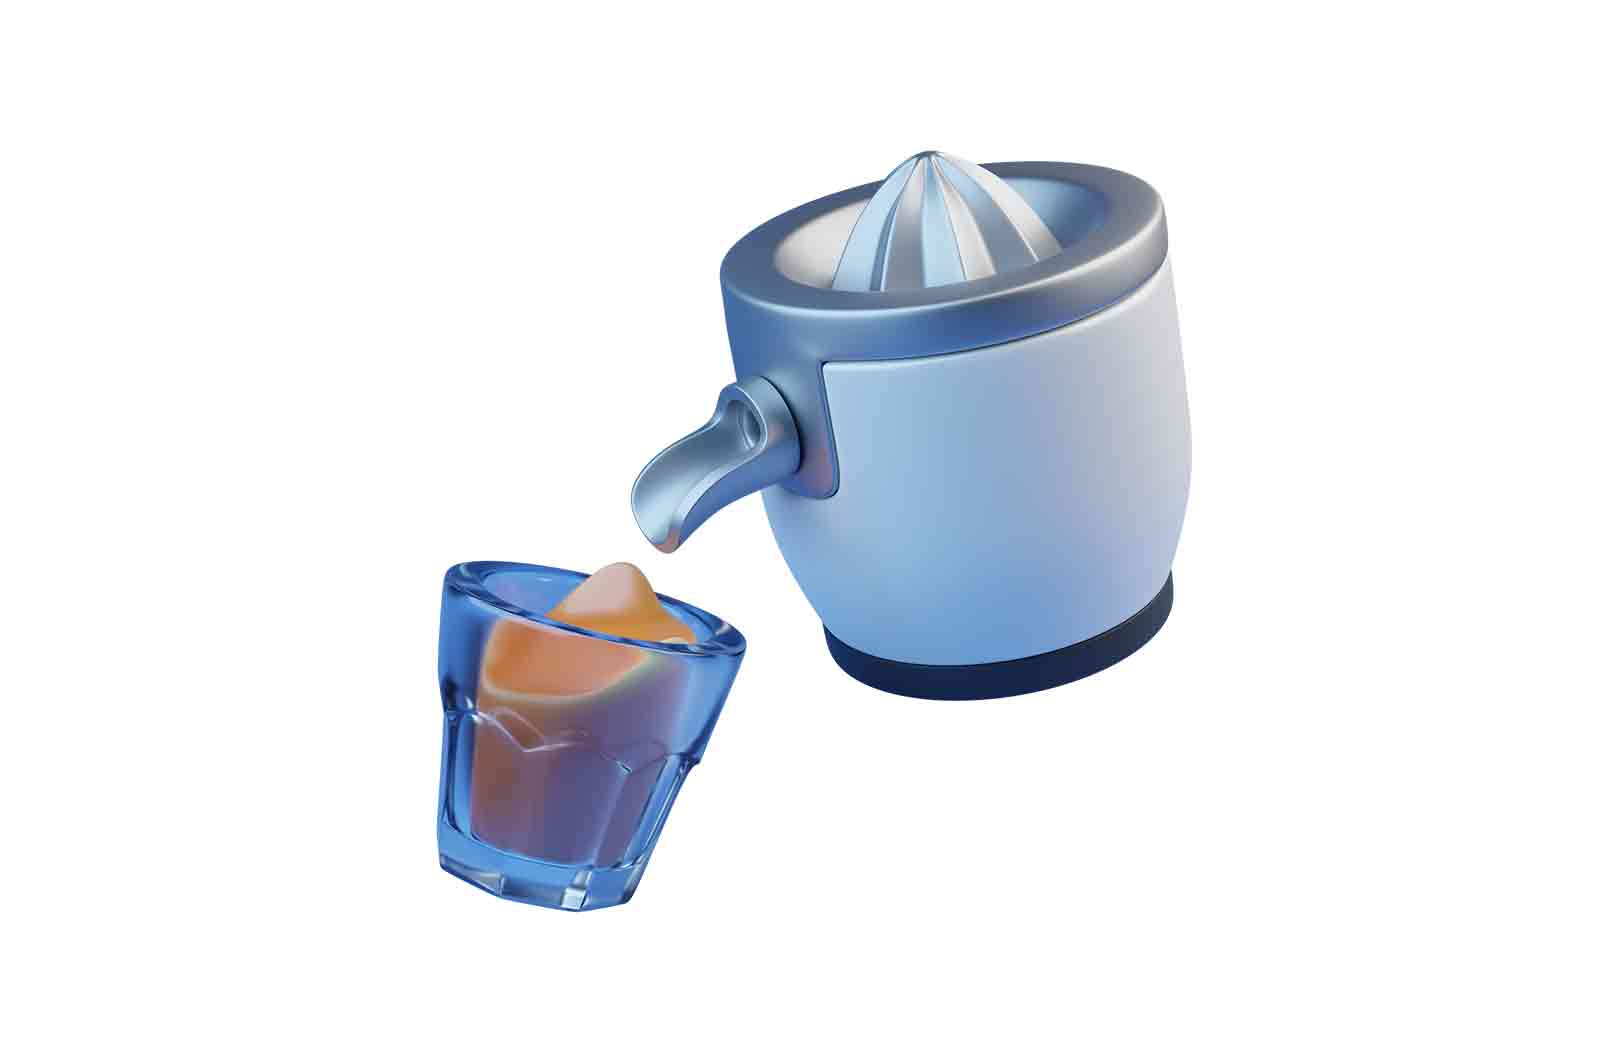 Juicy maker with fresh juice 3d rendered illustration. Modern juicer device. Kitchen equipment or appliance for making juice